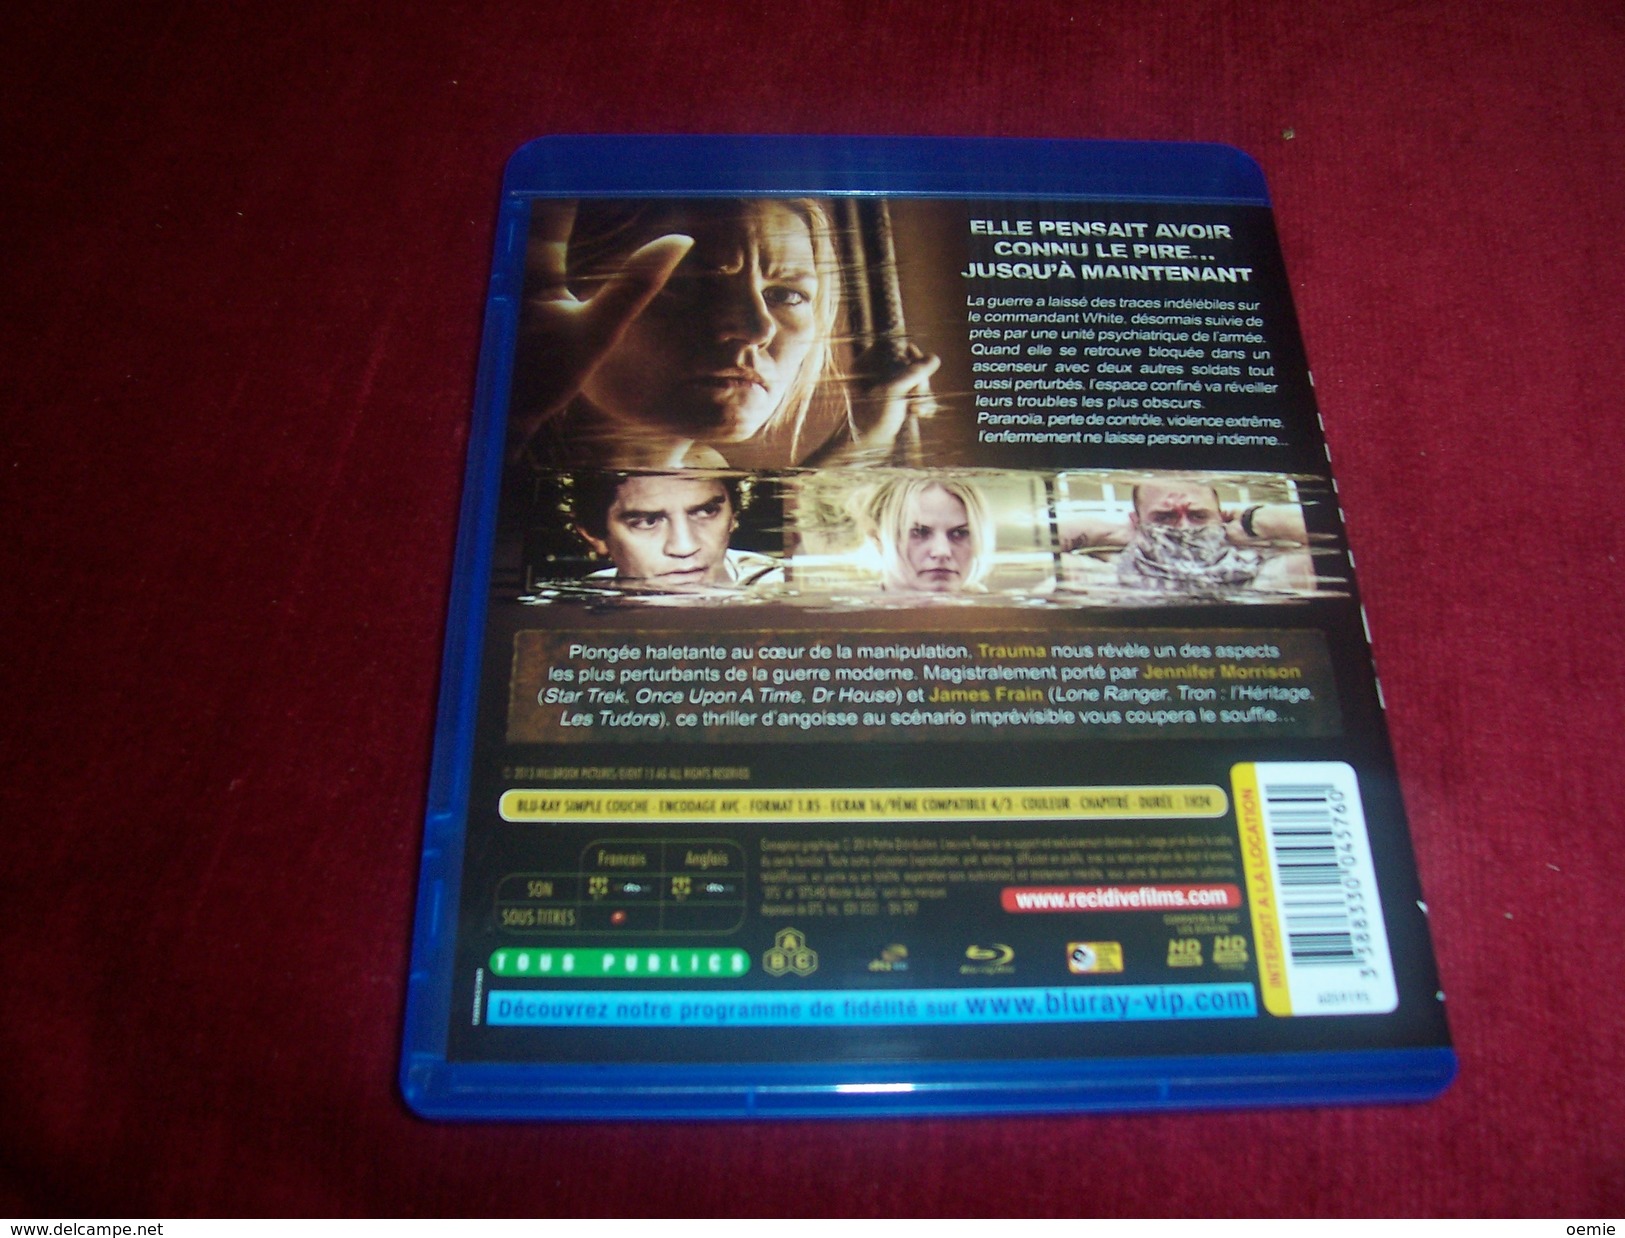 DVD  BLU RAY  ° TRAUMA   ° REVENUE DE L'ENFER ELLE VAS Y RETOURNER - Horror